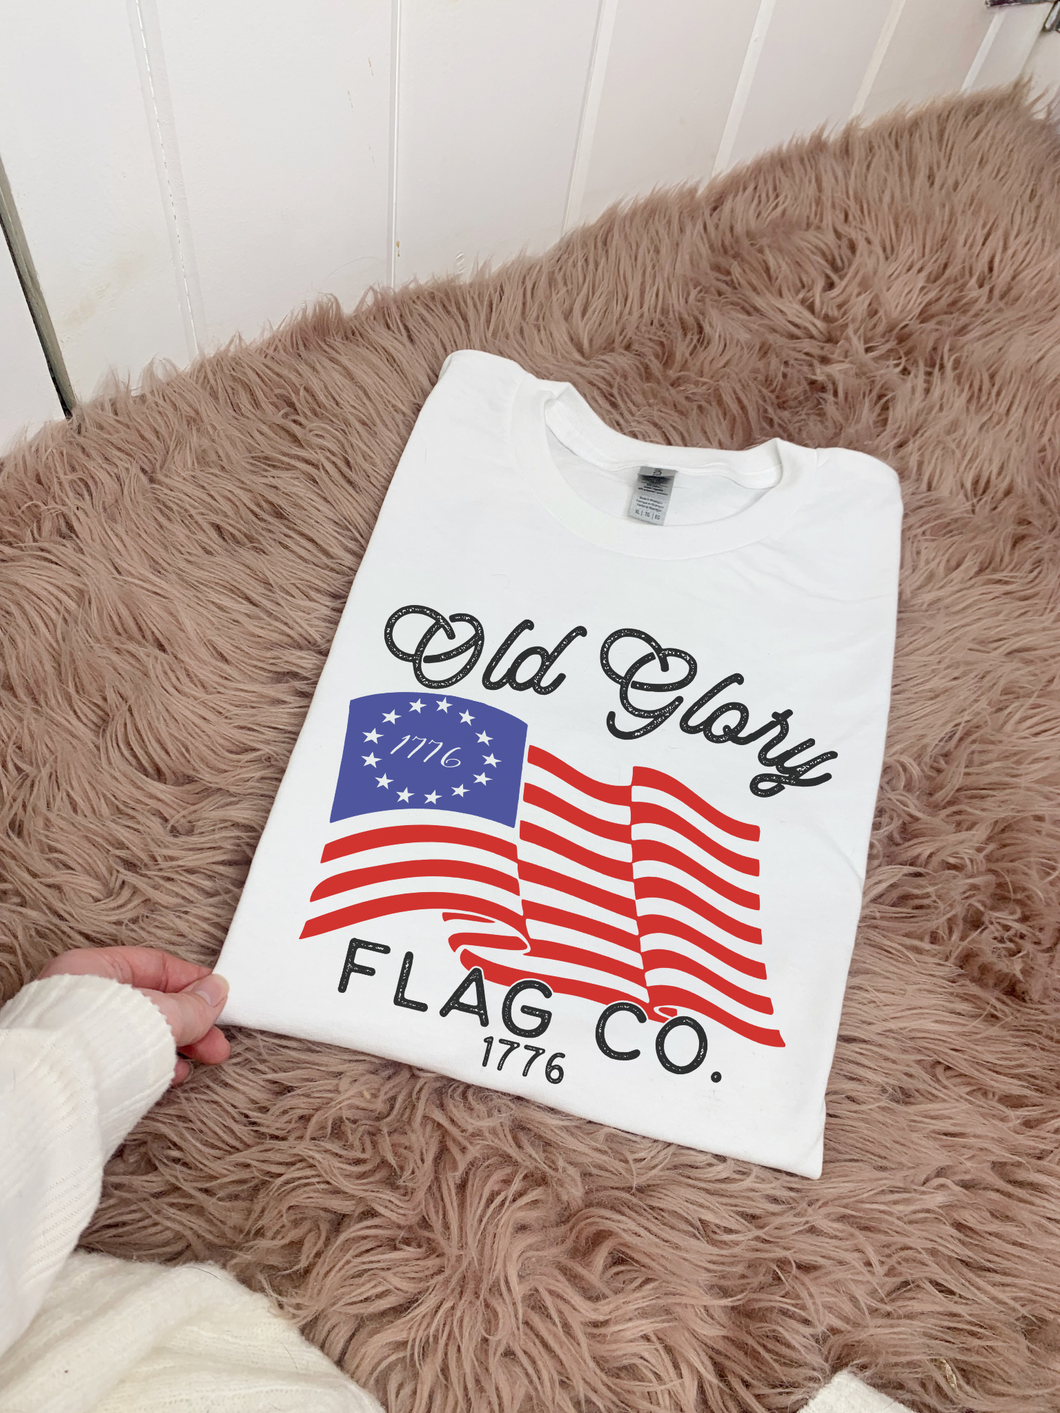 Old Glory Flag Co Patriotic Tee OR Sweatshirt